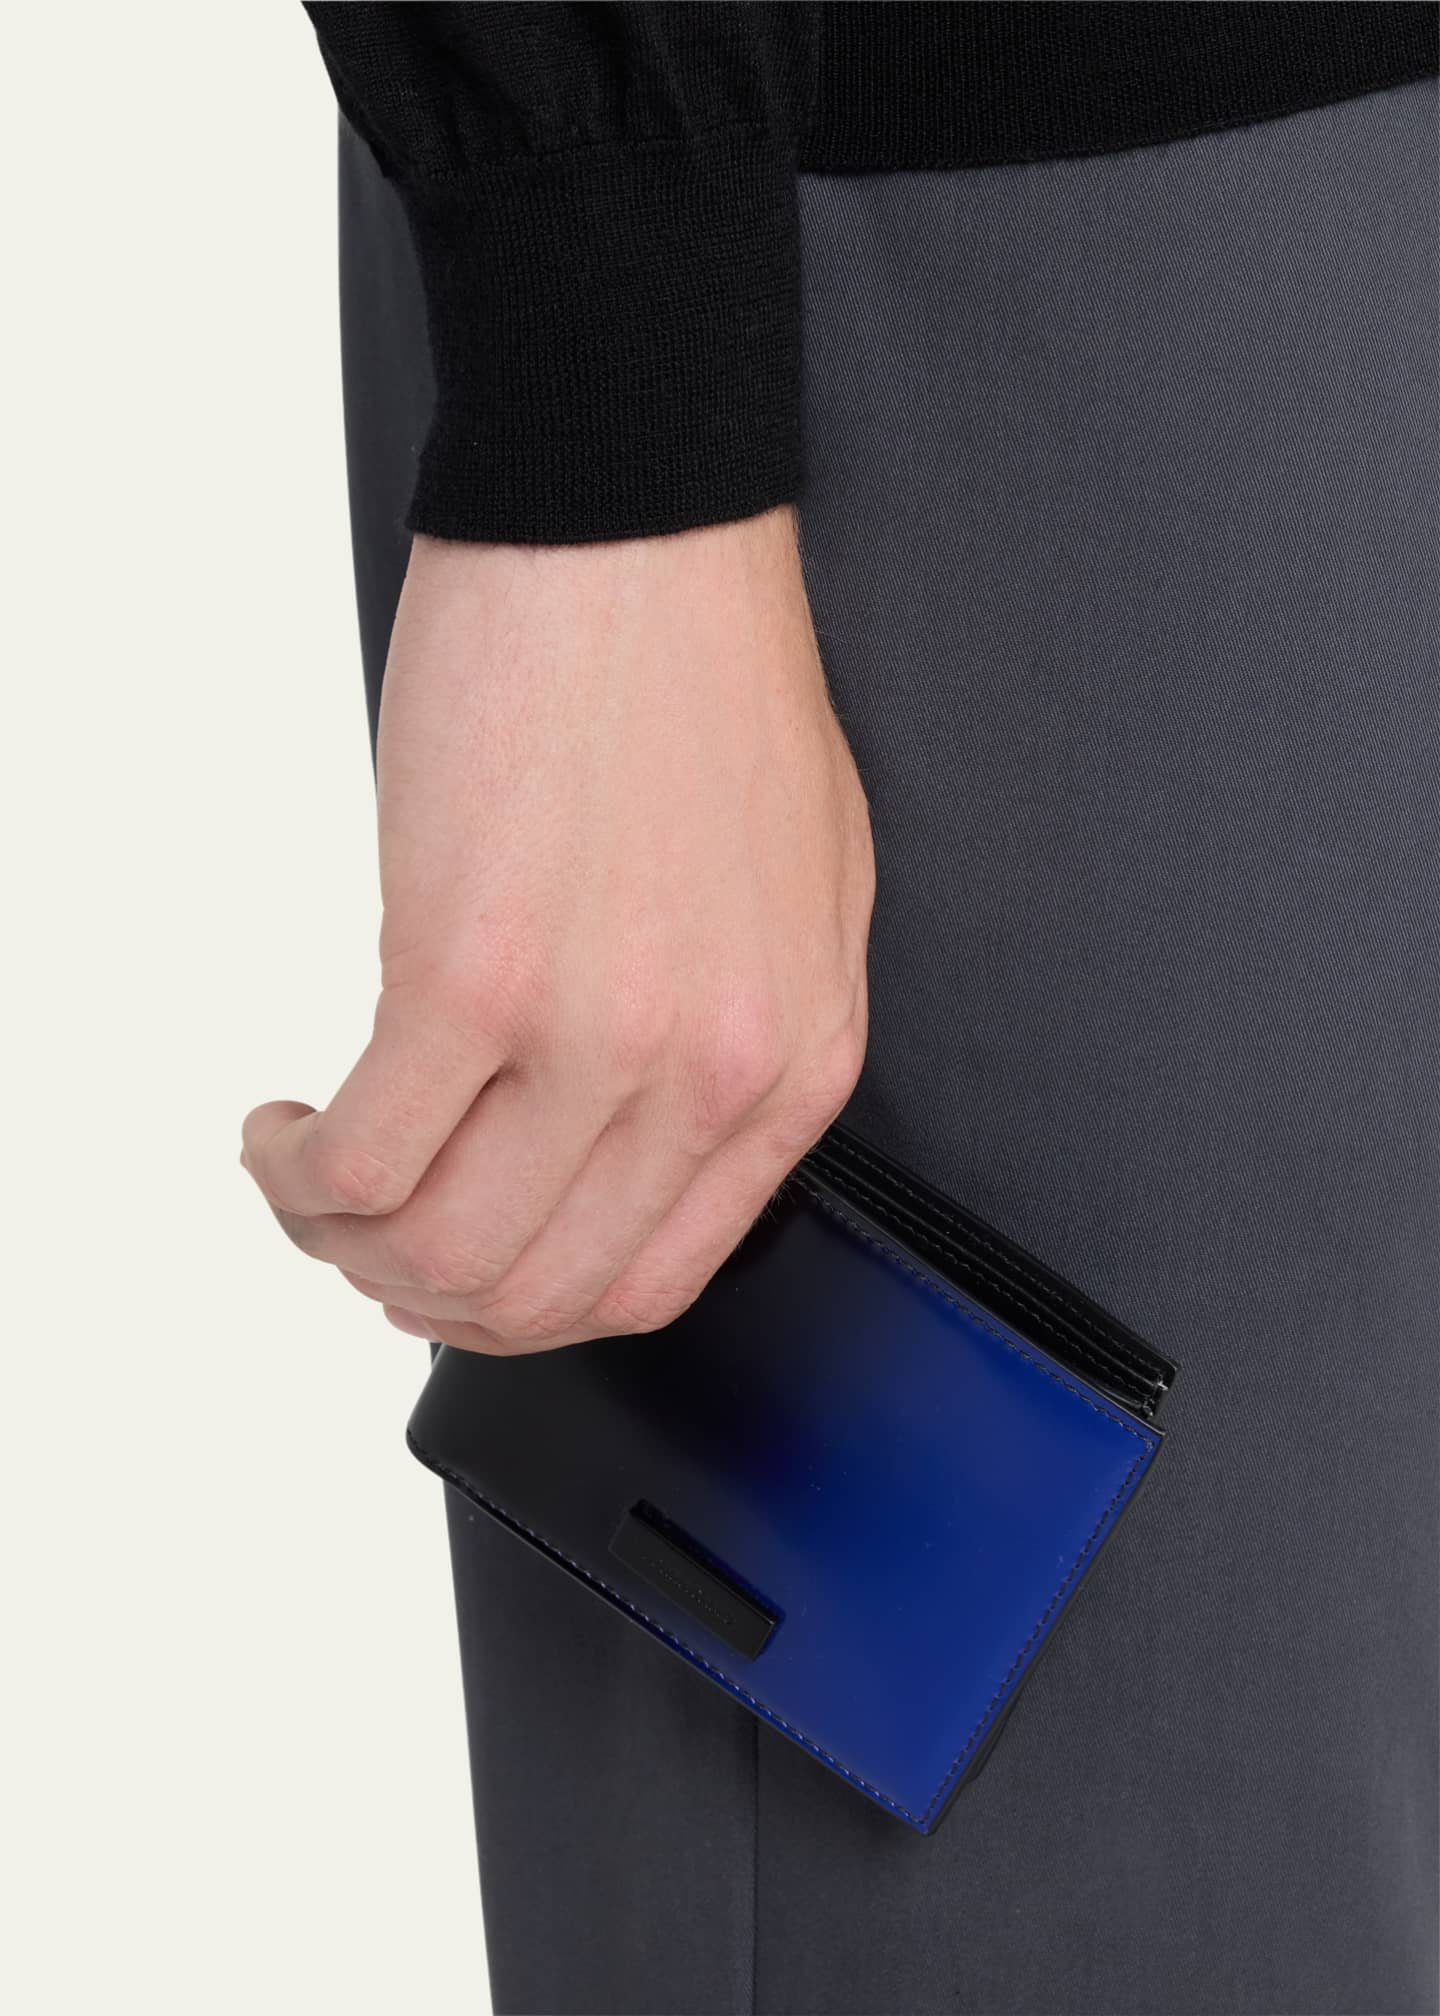 Premium Leather Bi-fold Wallet for Men – Yard of Deals